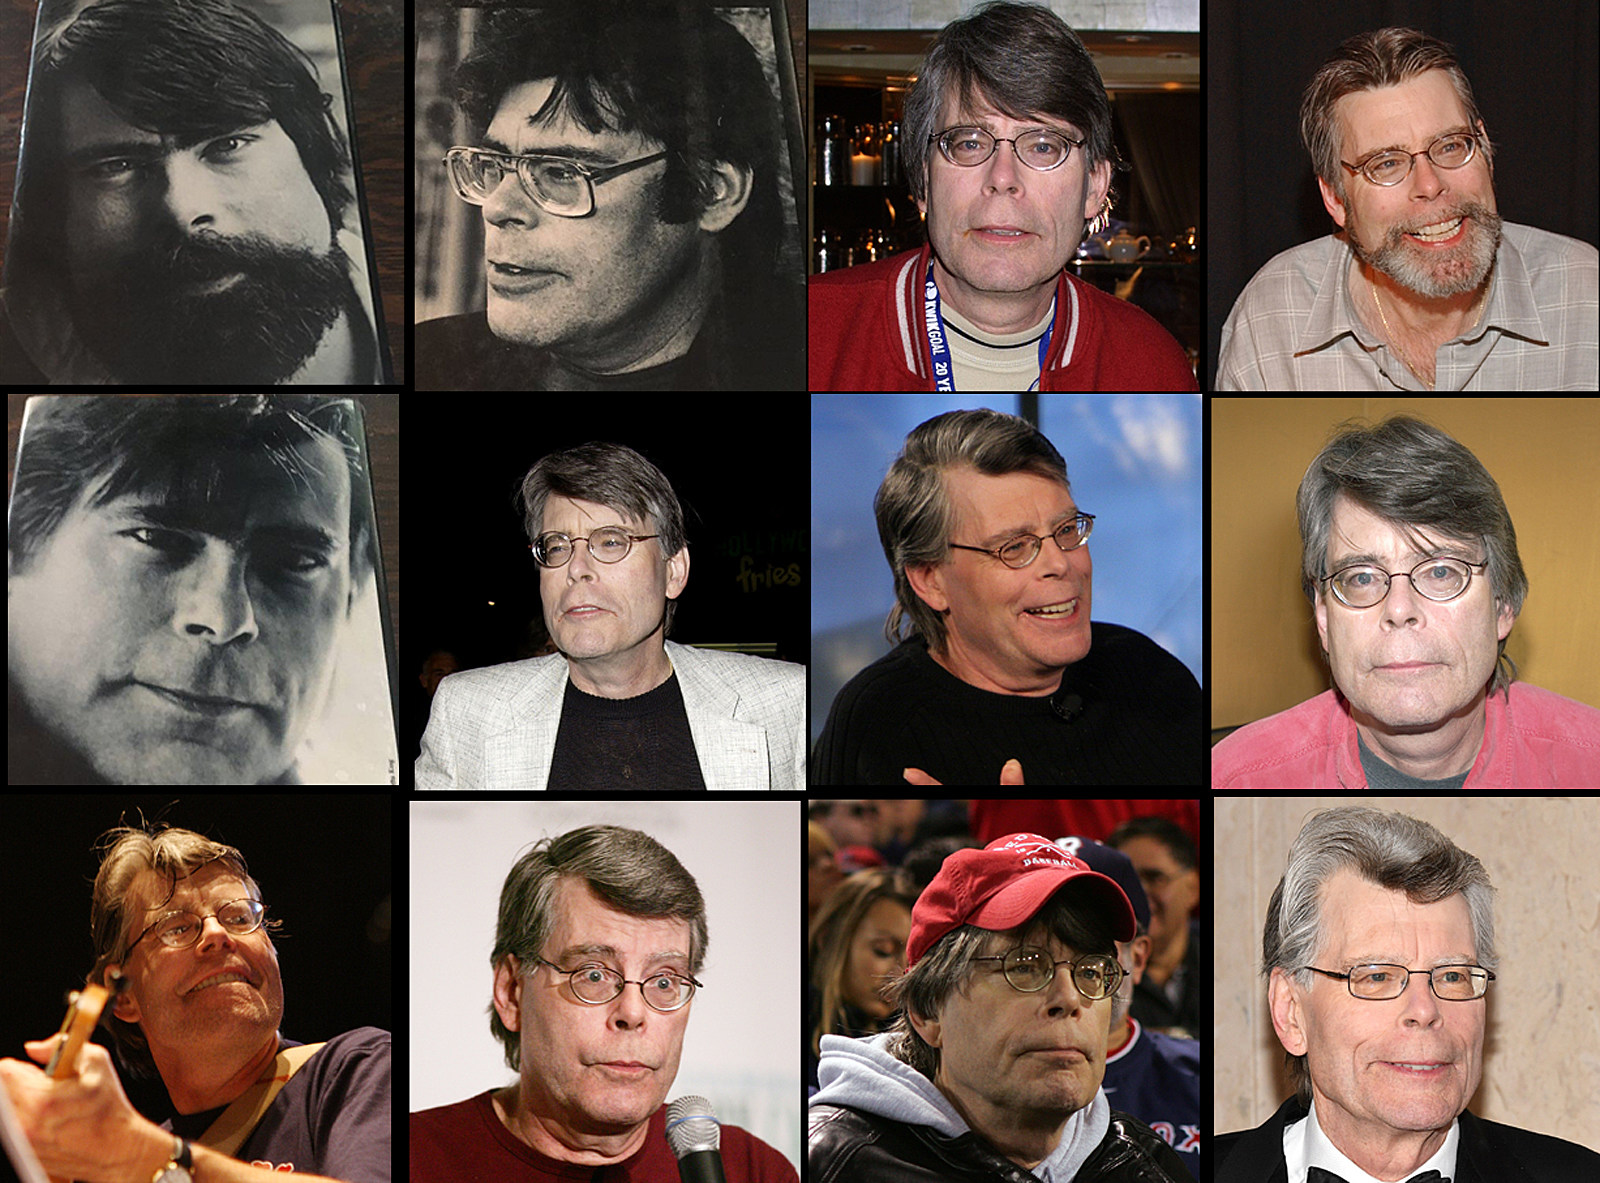 Stephen King Through The Years [PHOTOS]